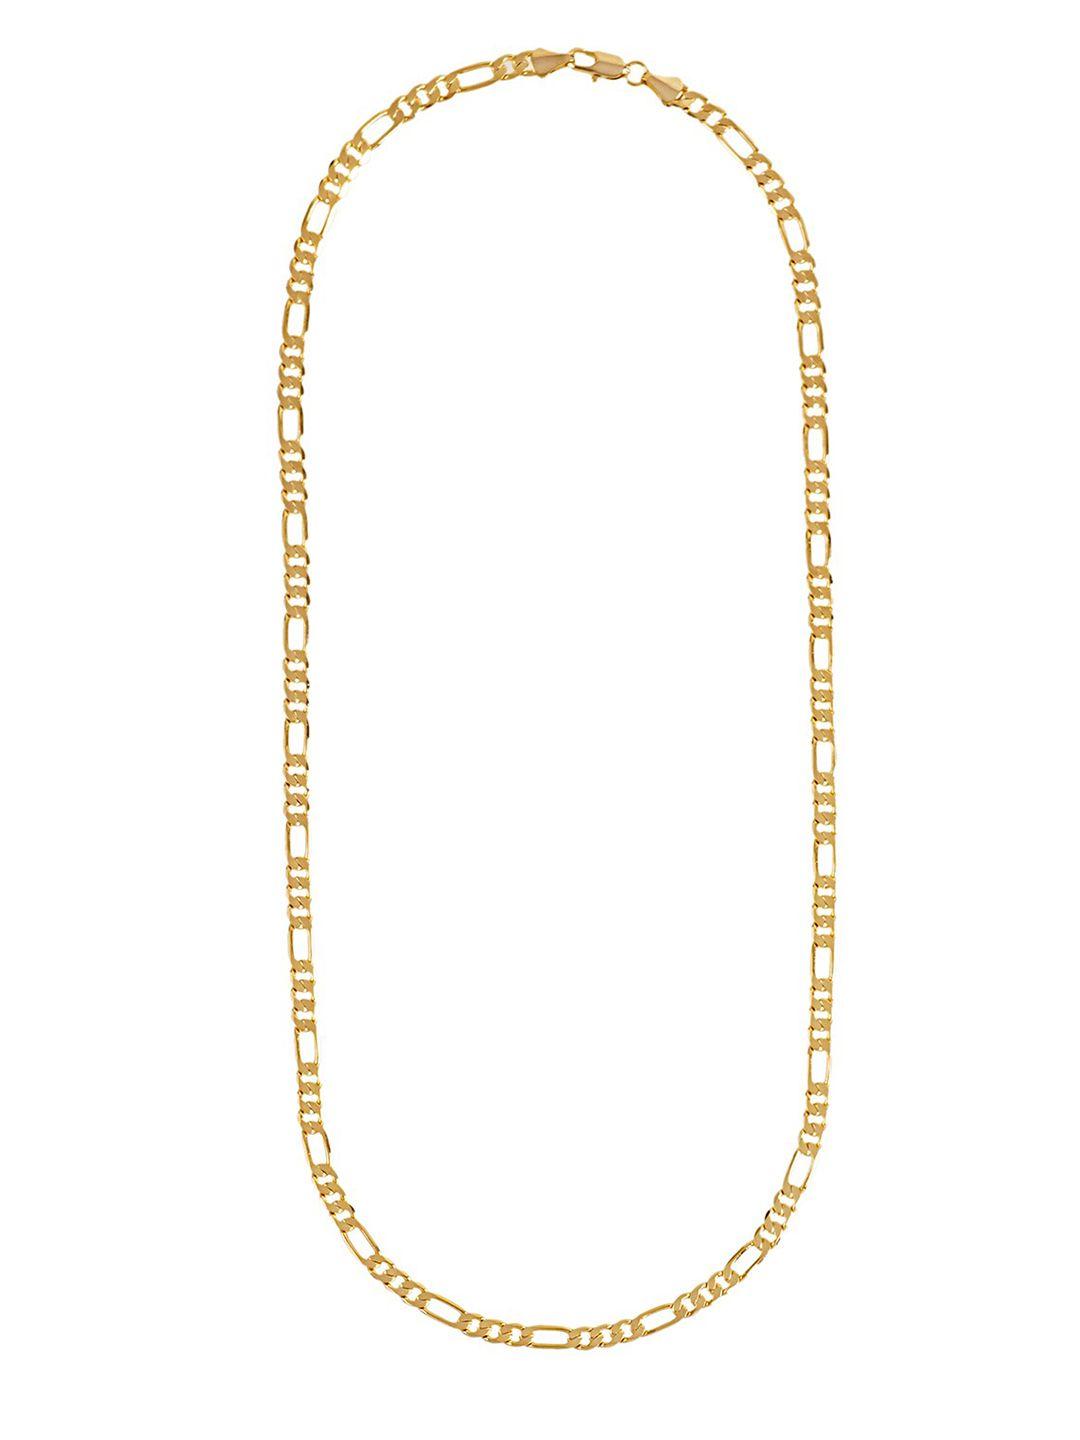 shining jewel - by shivansh brass gold-plated chain